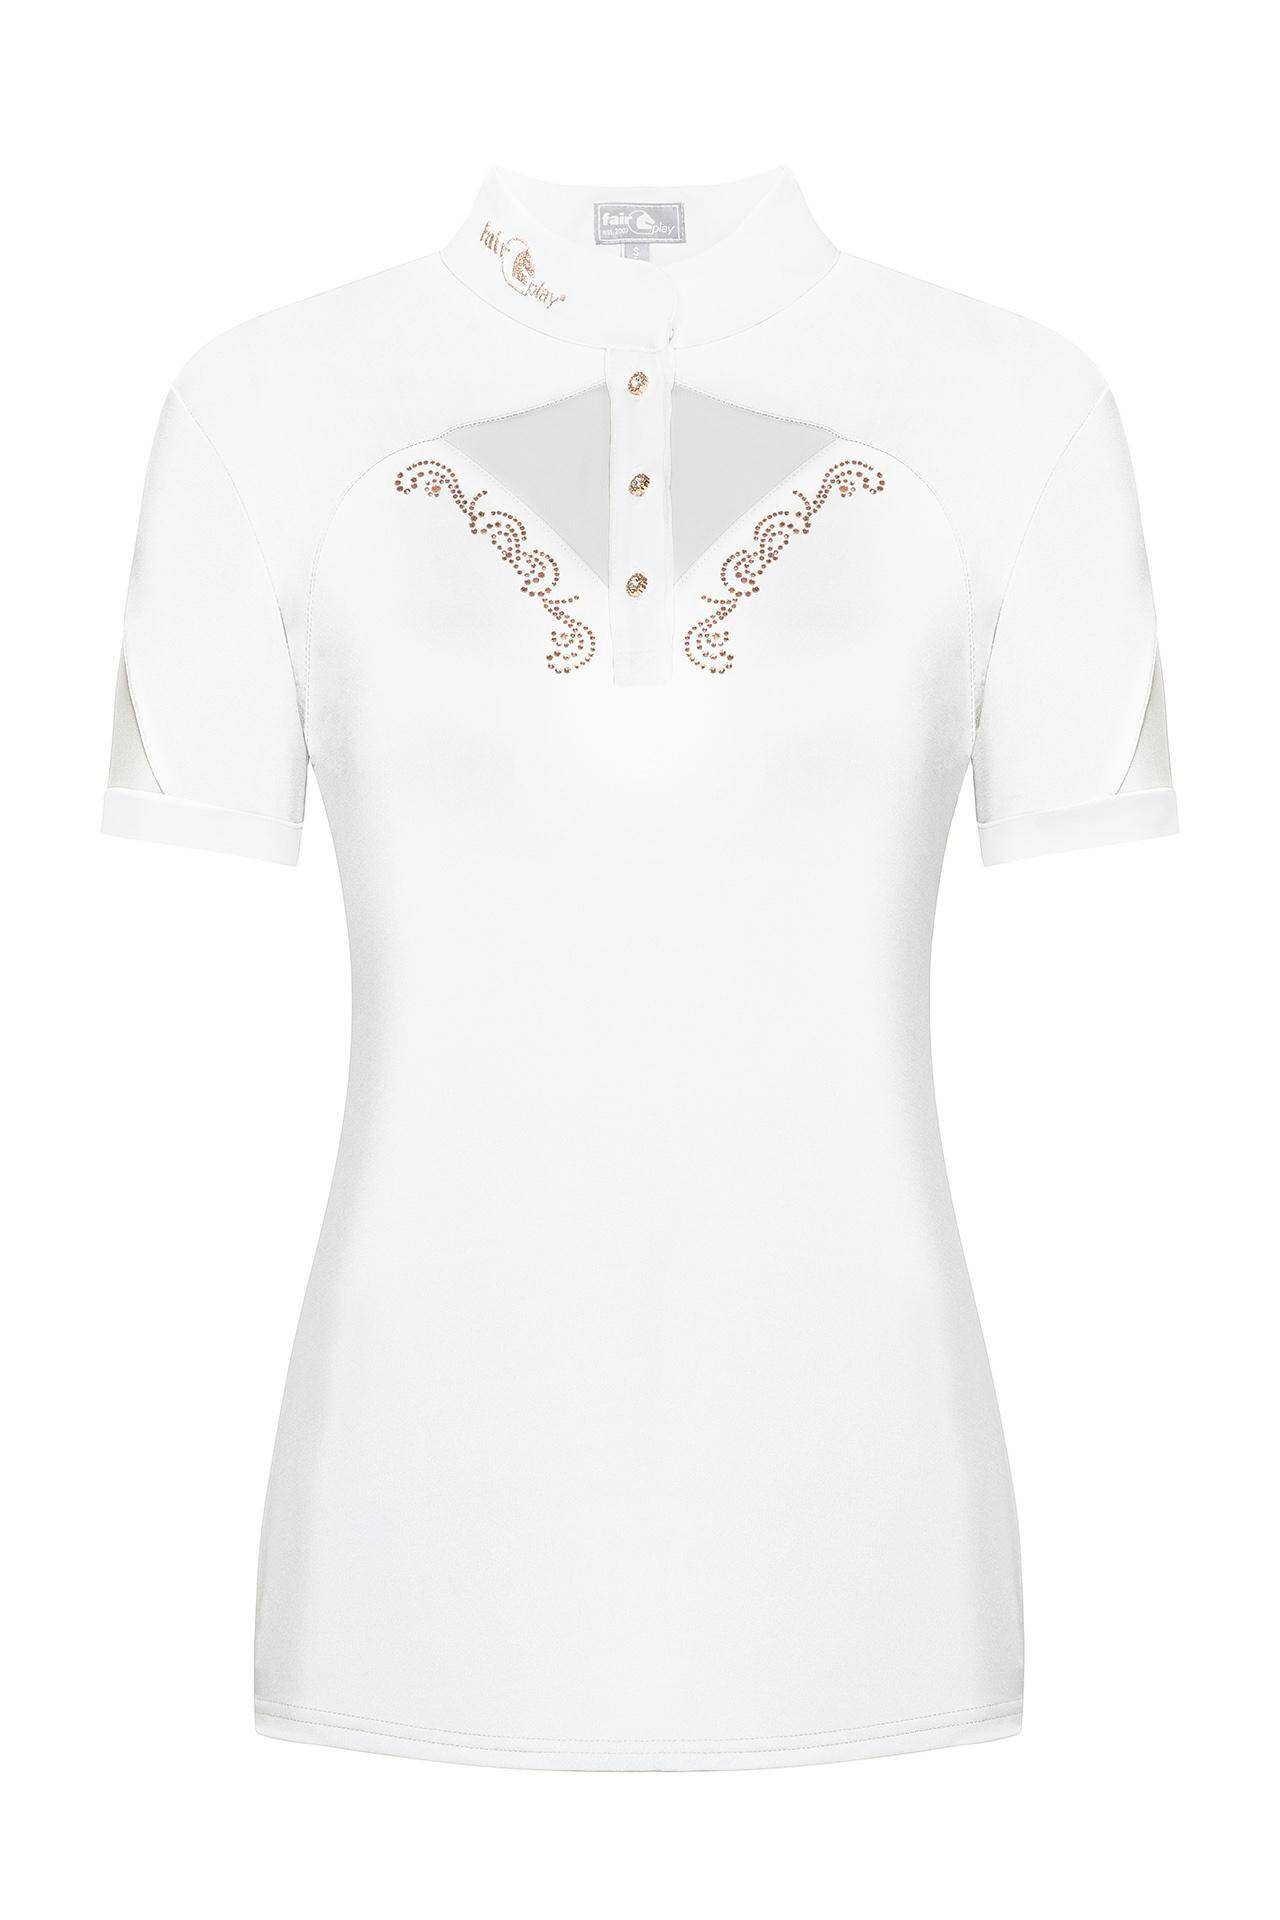 Koszulka FP CATHRINE ROSEGOLD biały 40